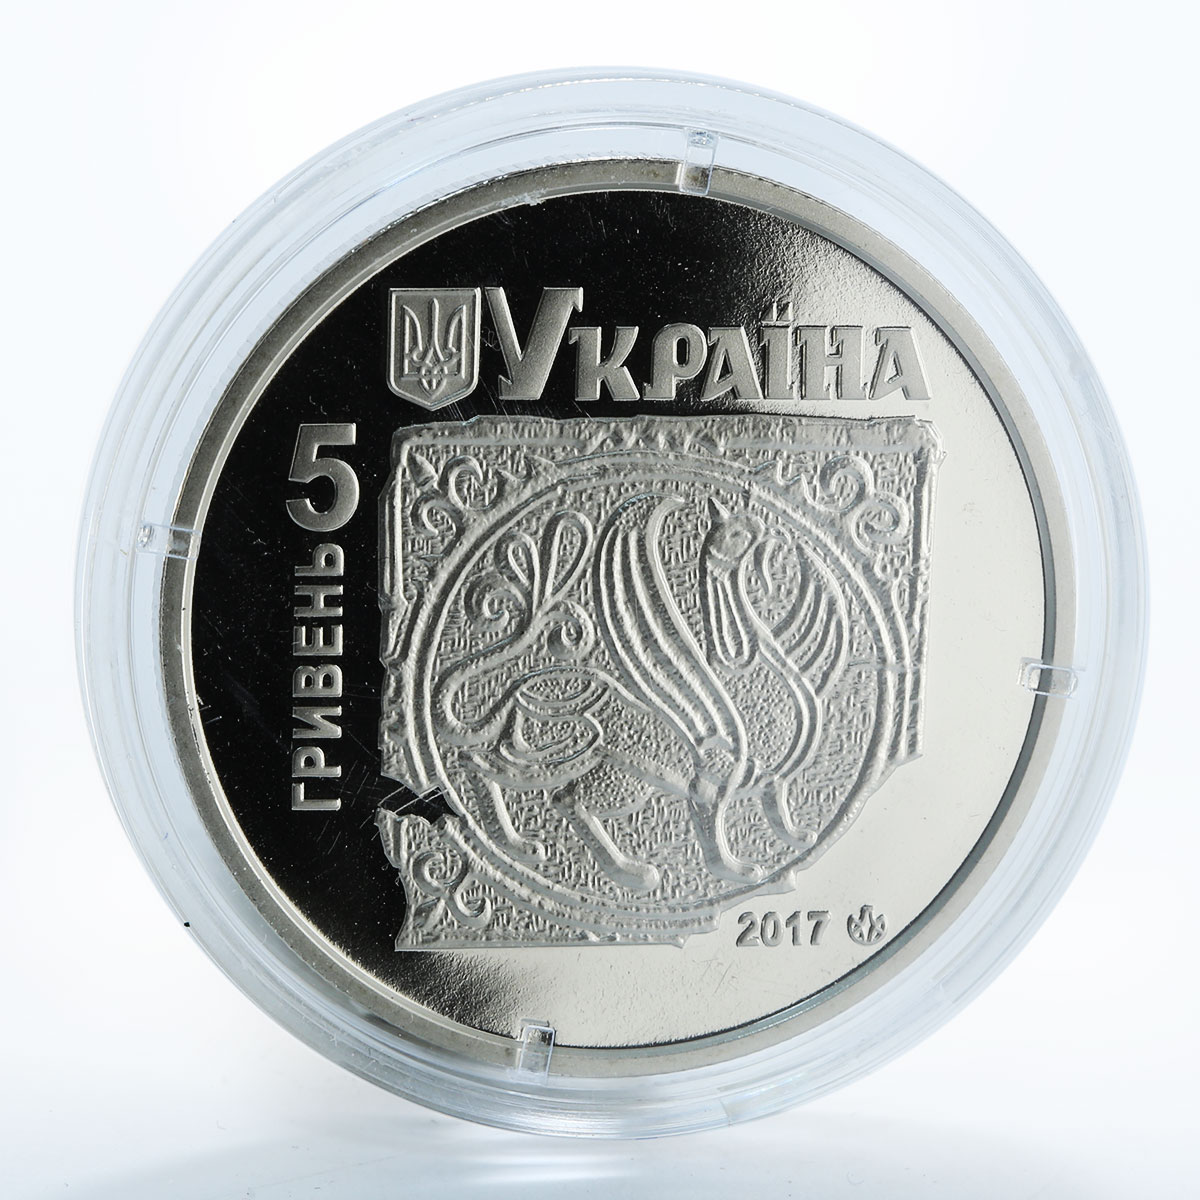 Ukraine 5 hryvnia Ancient Halych/Galich kingdom Galicia castle nickel coin 2017